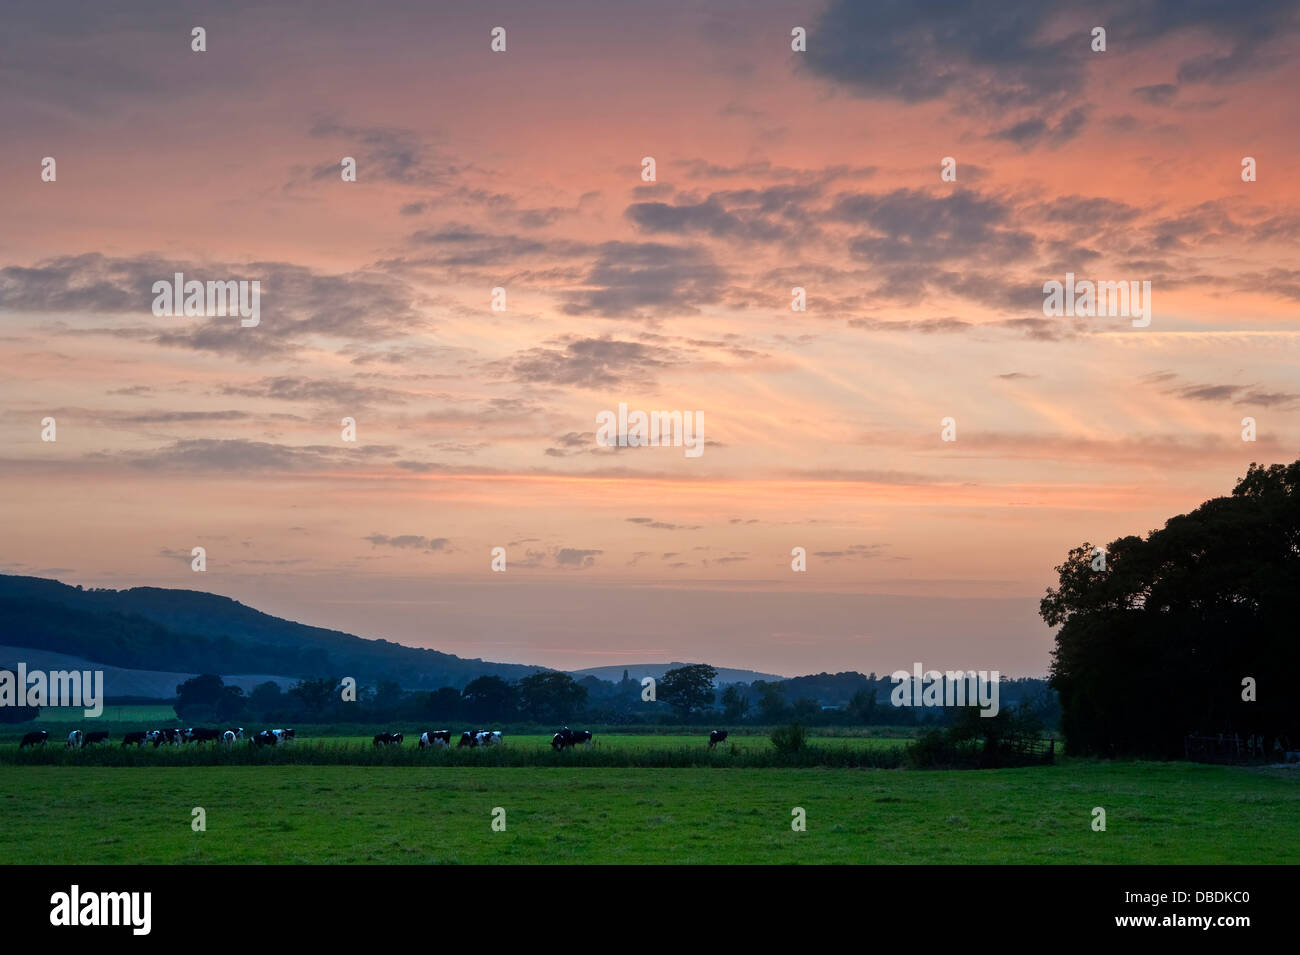 Hermosa imagen a través de campo de vaca en sunset vibrante paisaje de campiña inglesa Foto de stock